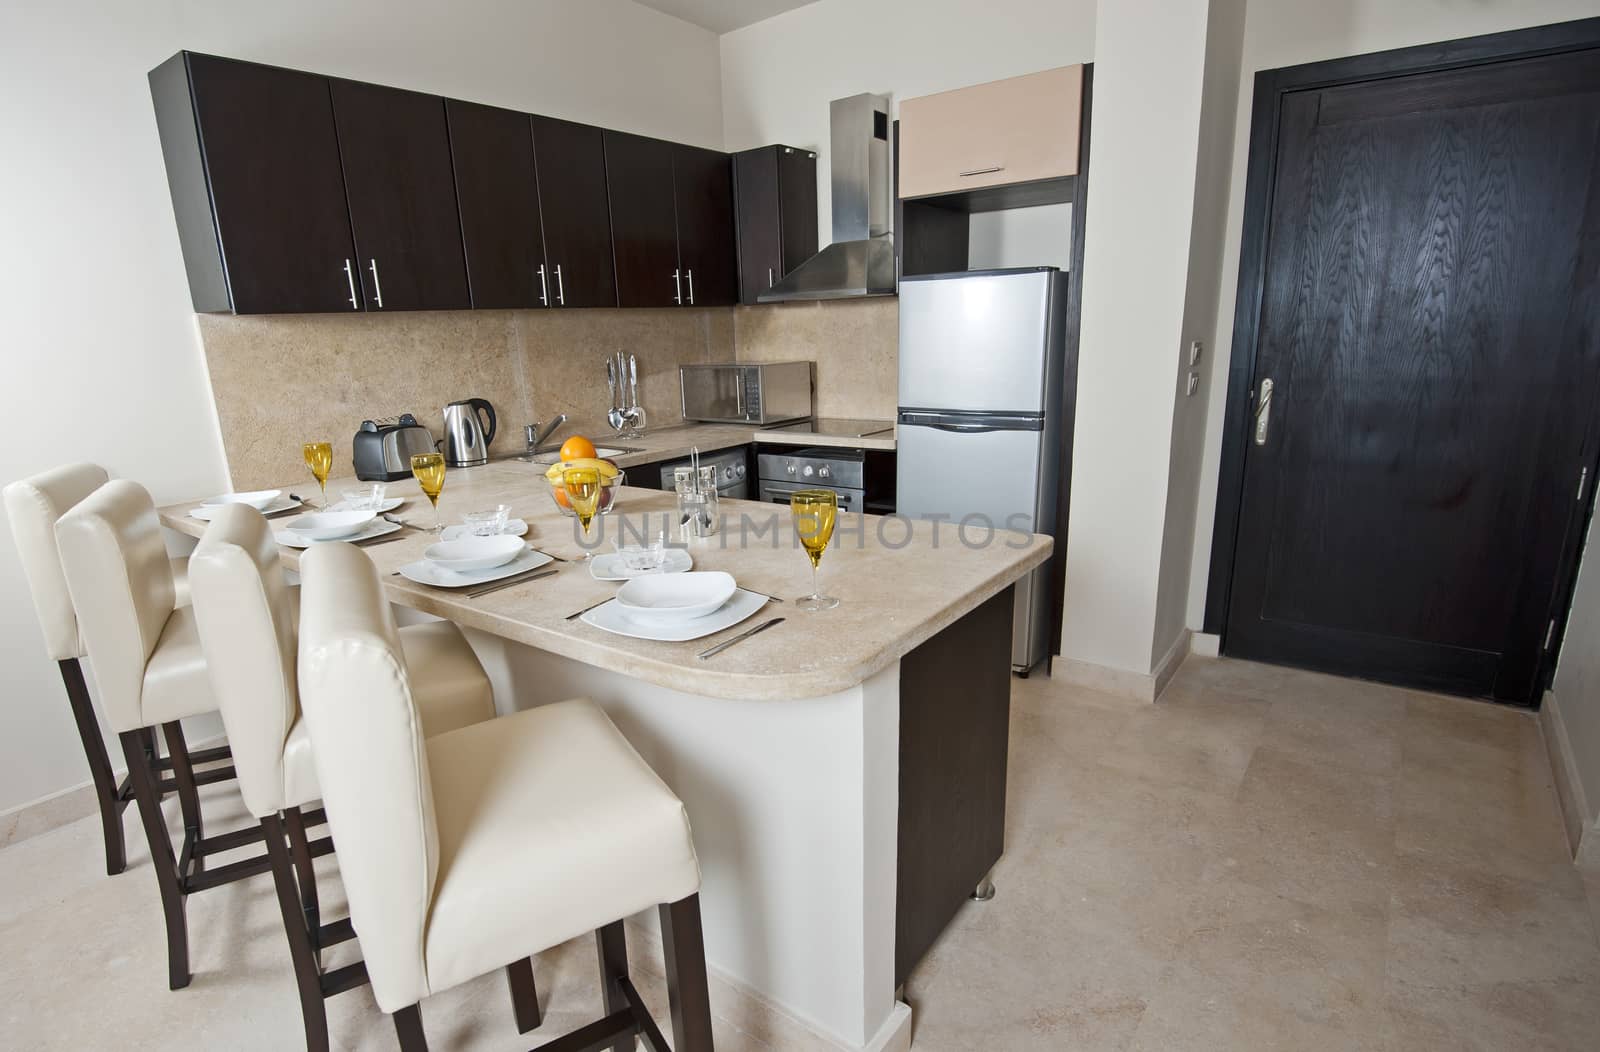 Kitchen area of a luxury apartment